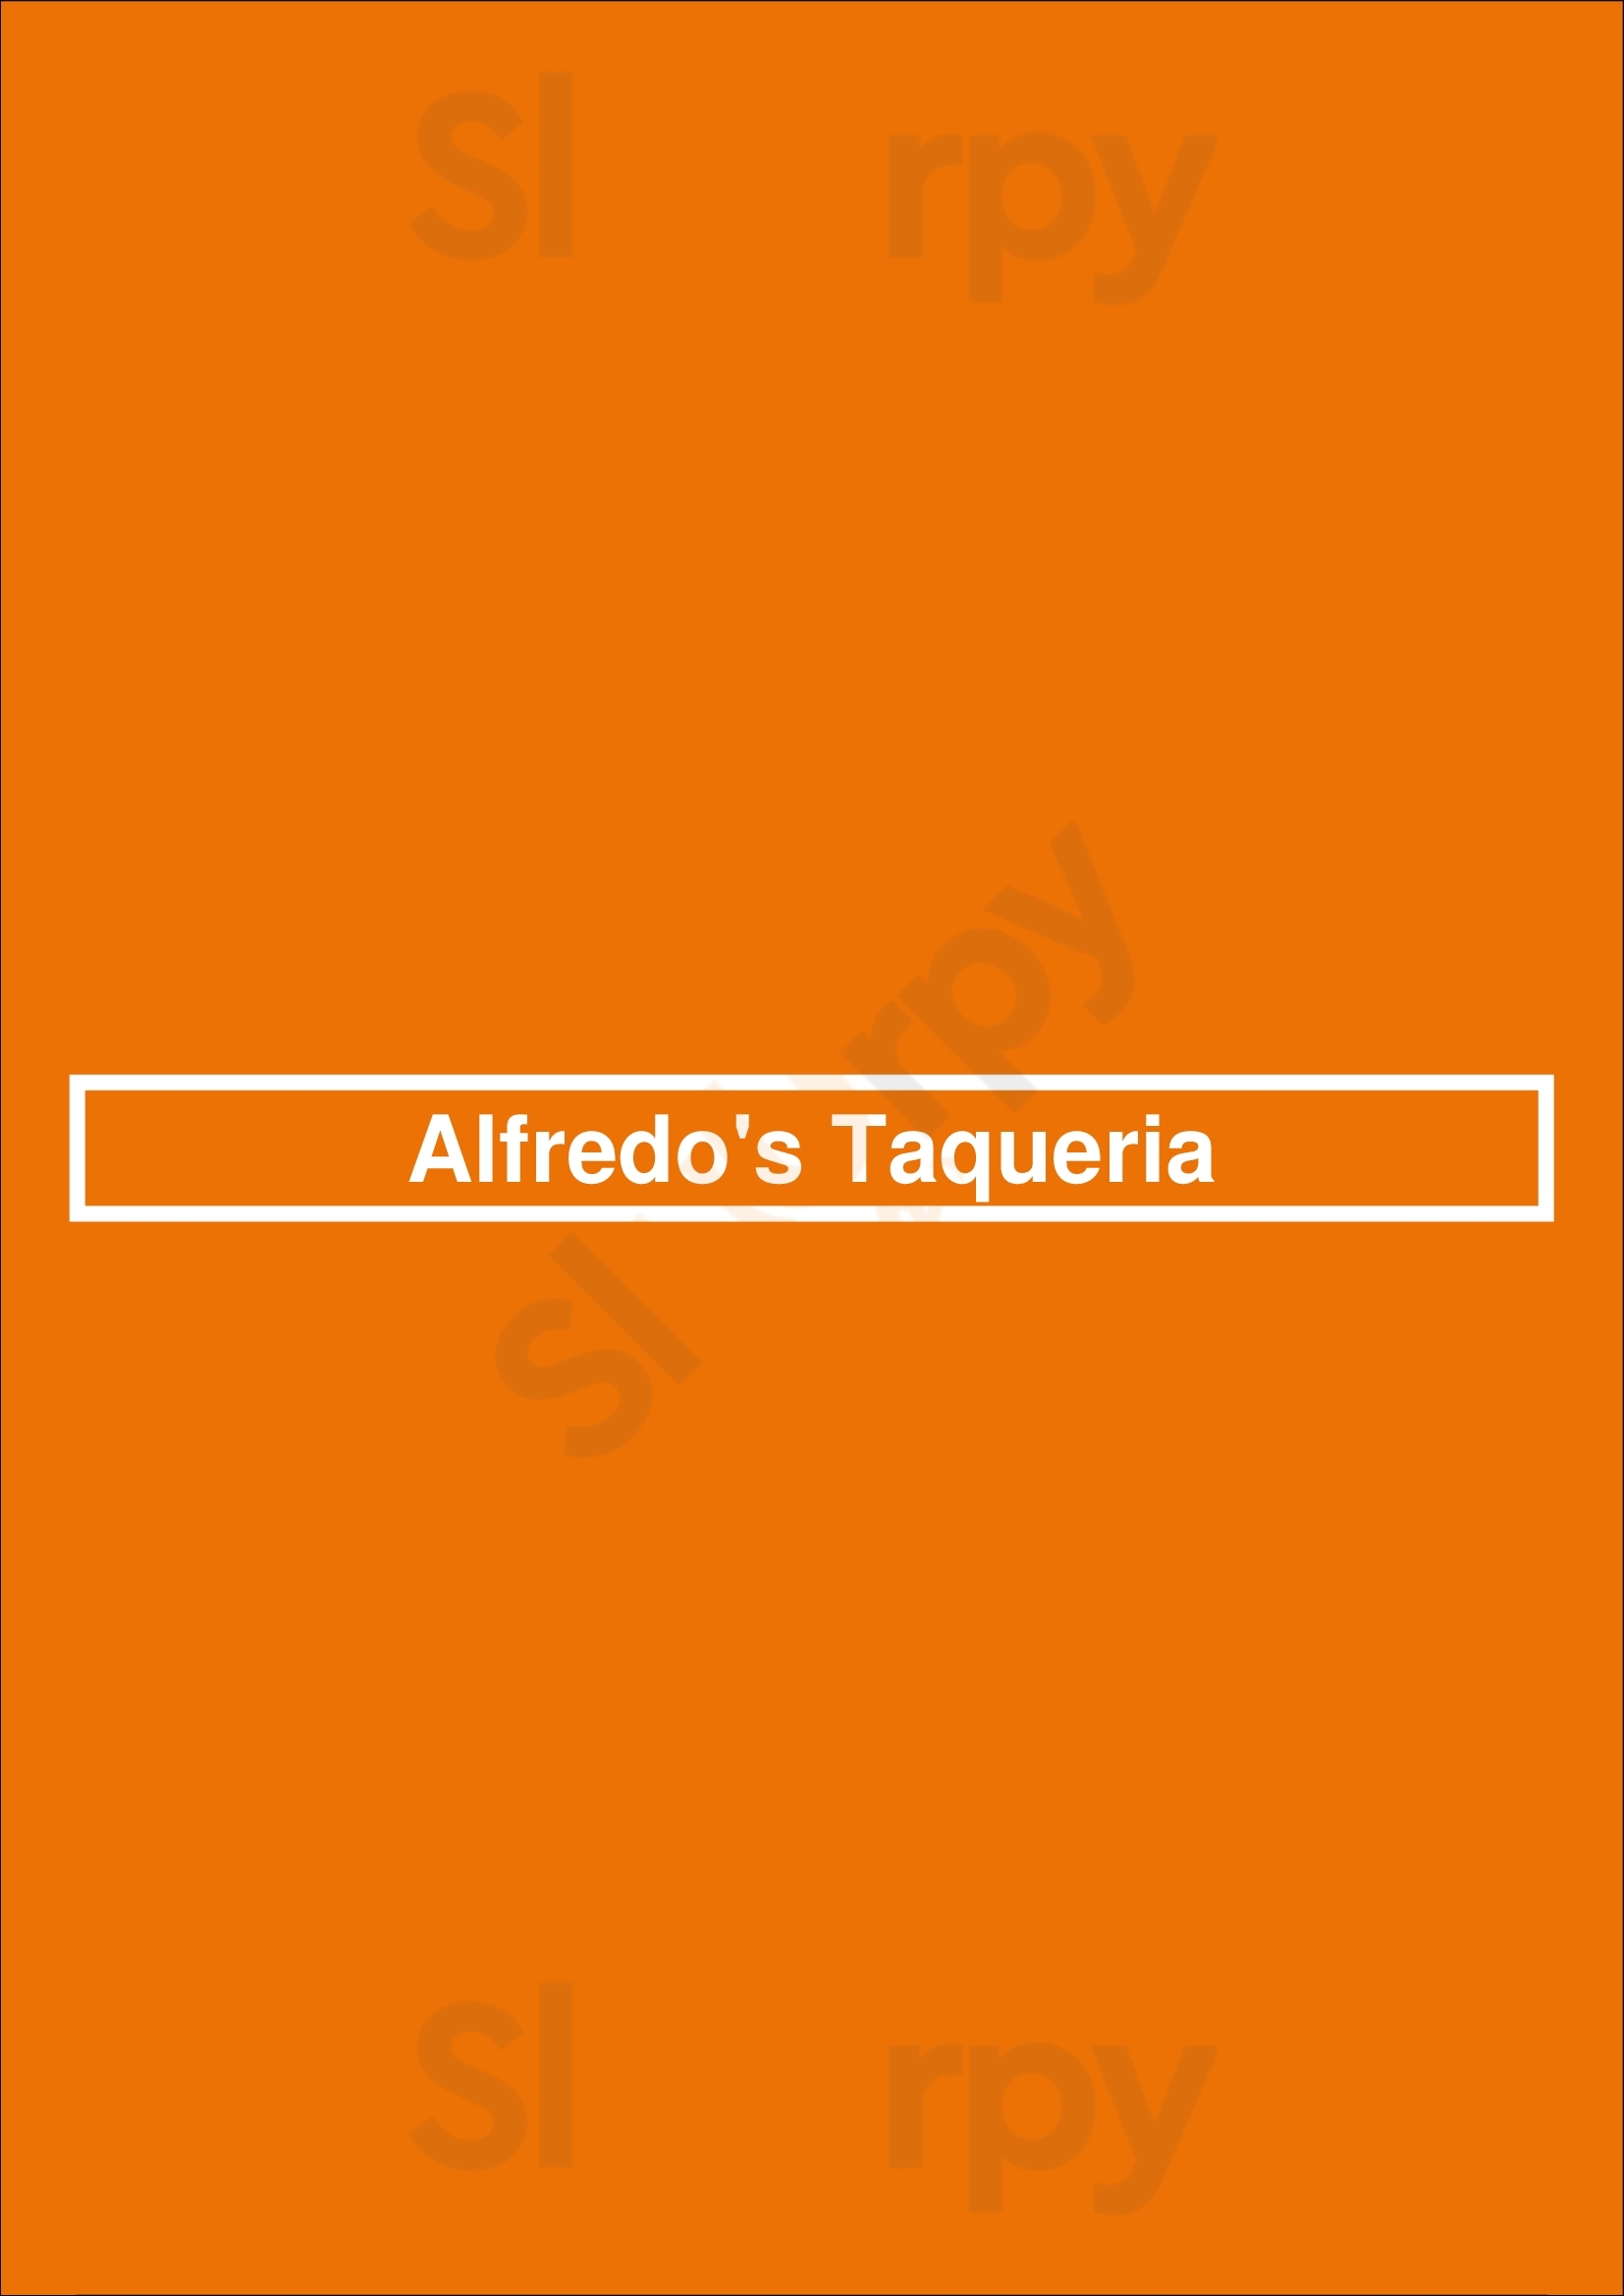 Alfredo's Taqueria Rotterdam Menu - 1